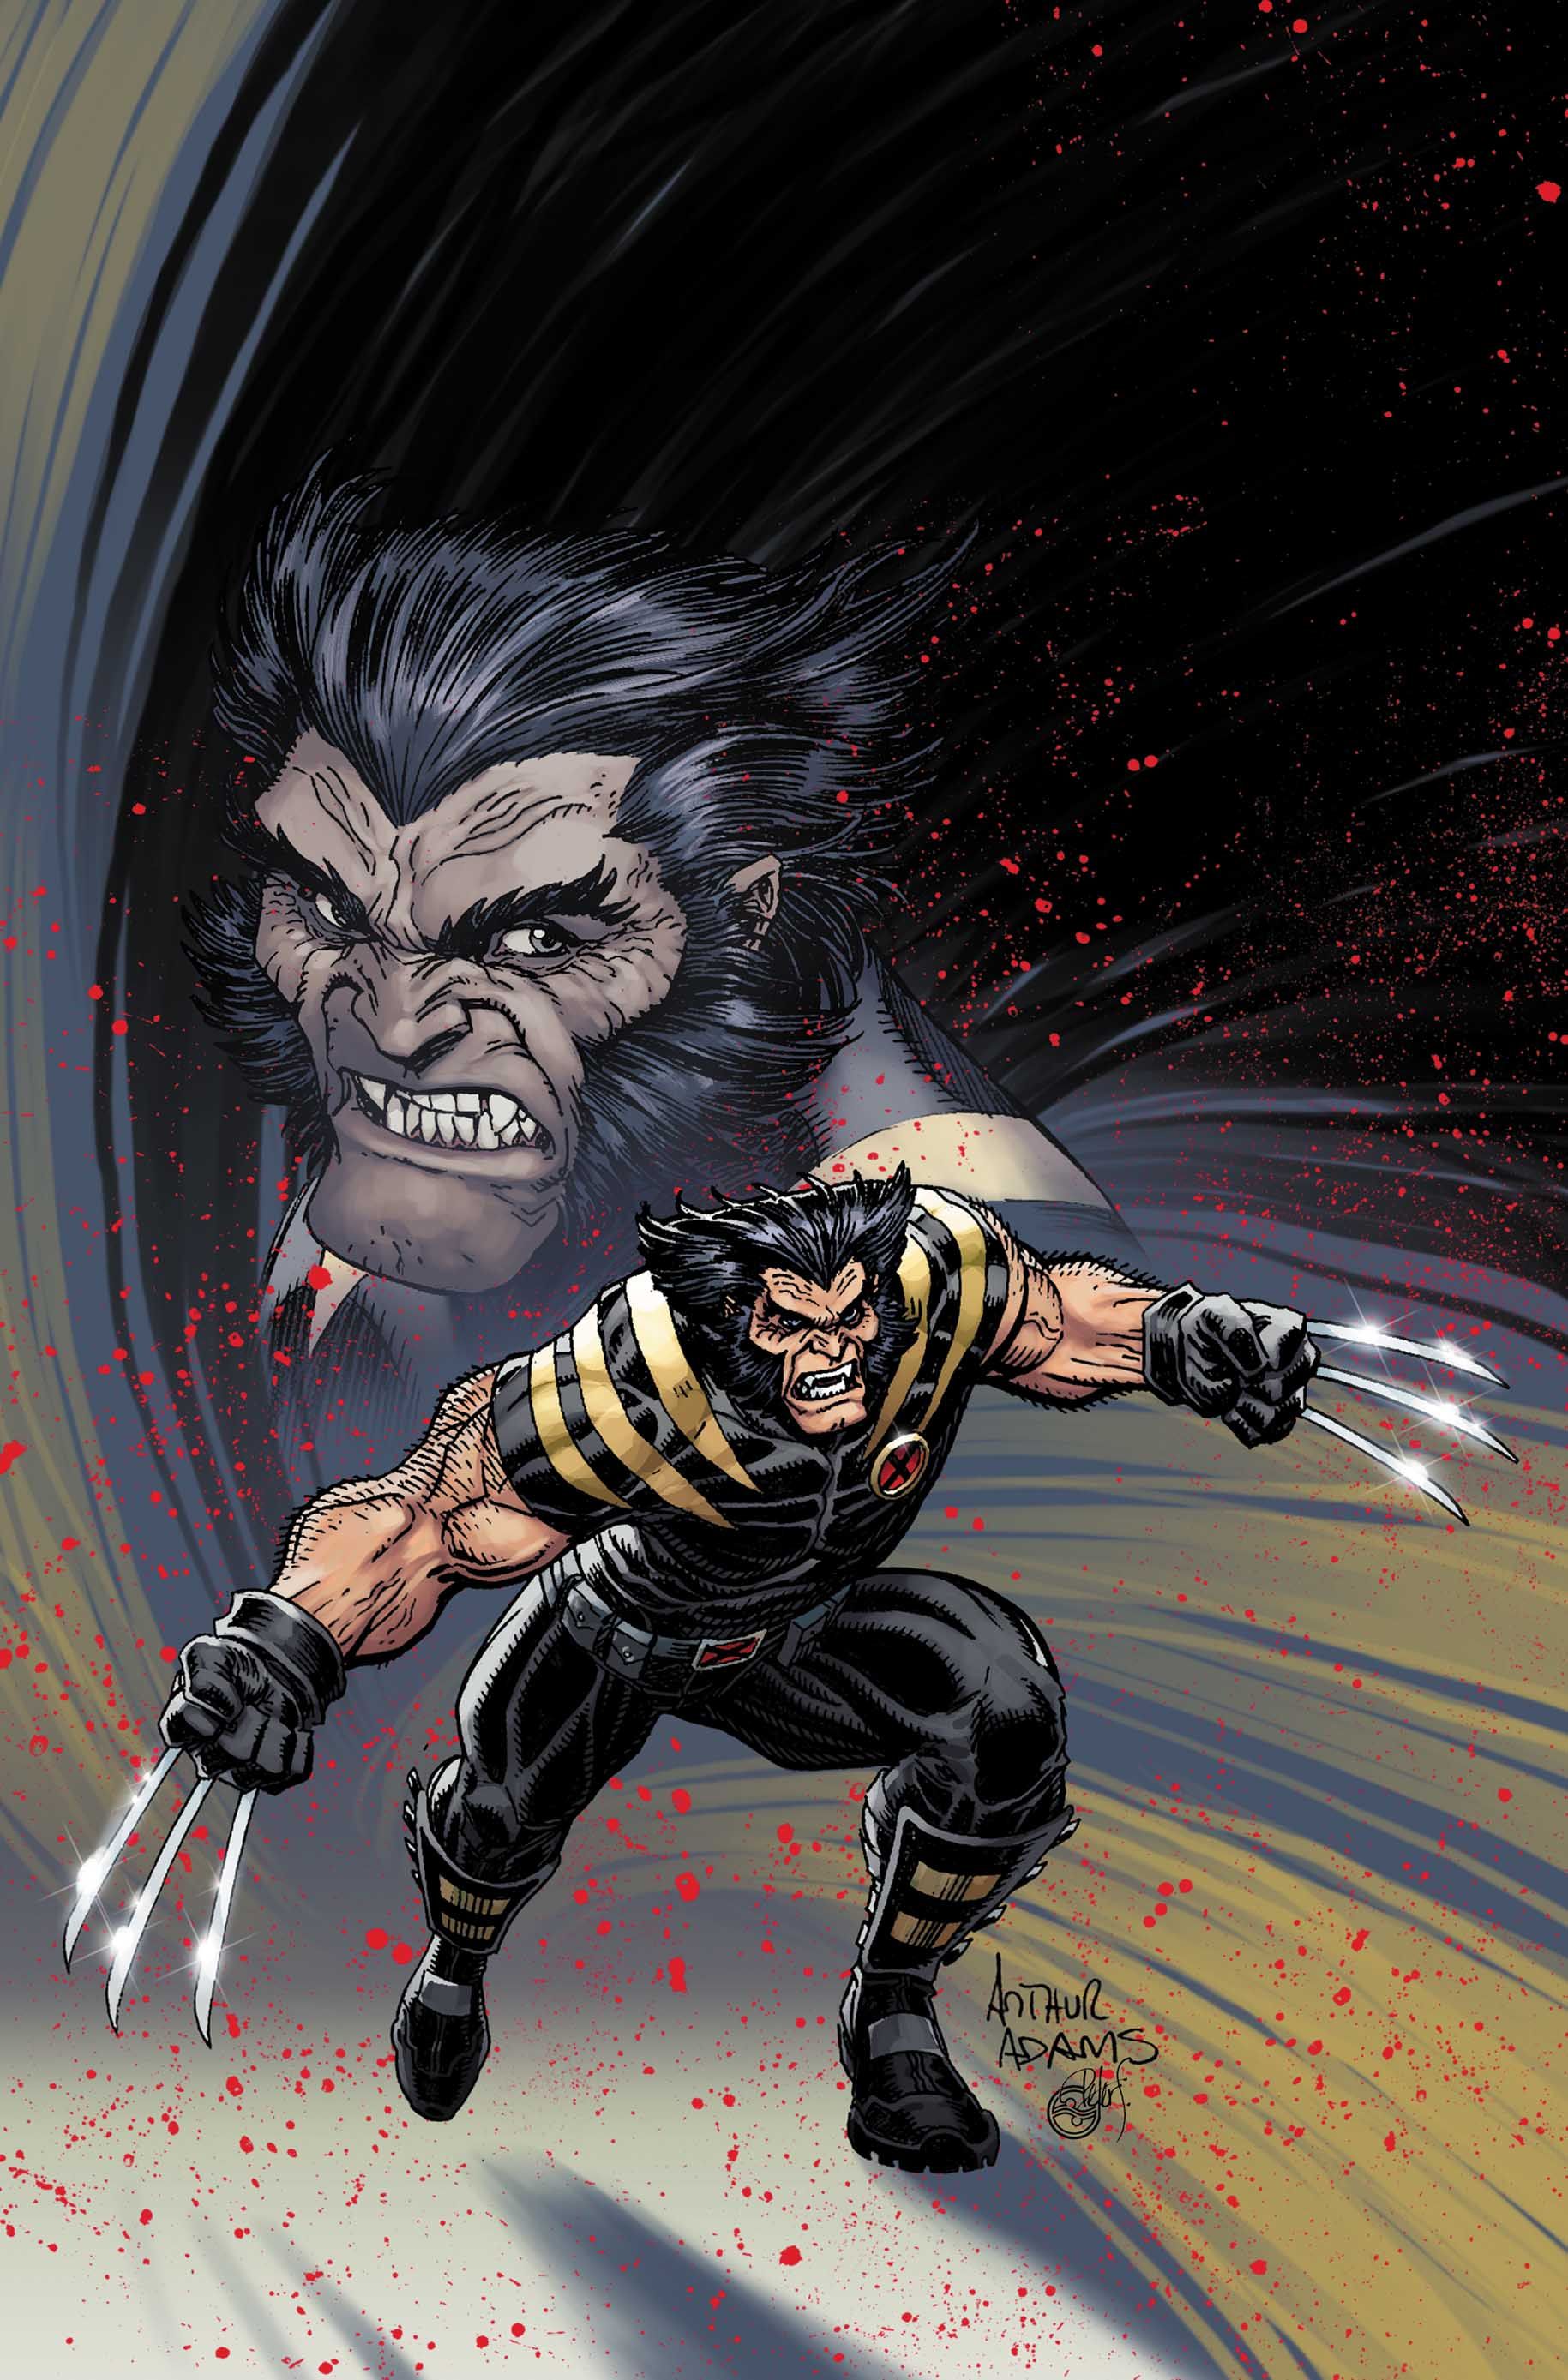 Drawing Wolverine - INKTOBER DAY 3 - Marvel Comics - DeMoose Art - YouTube